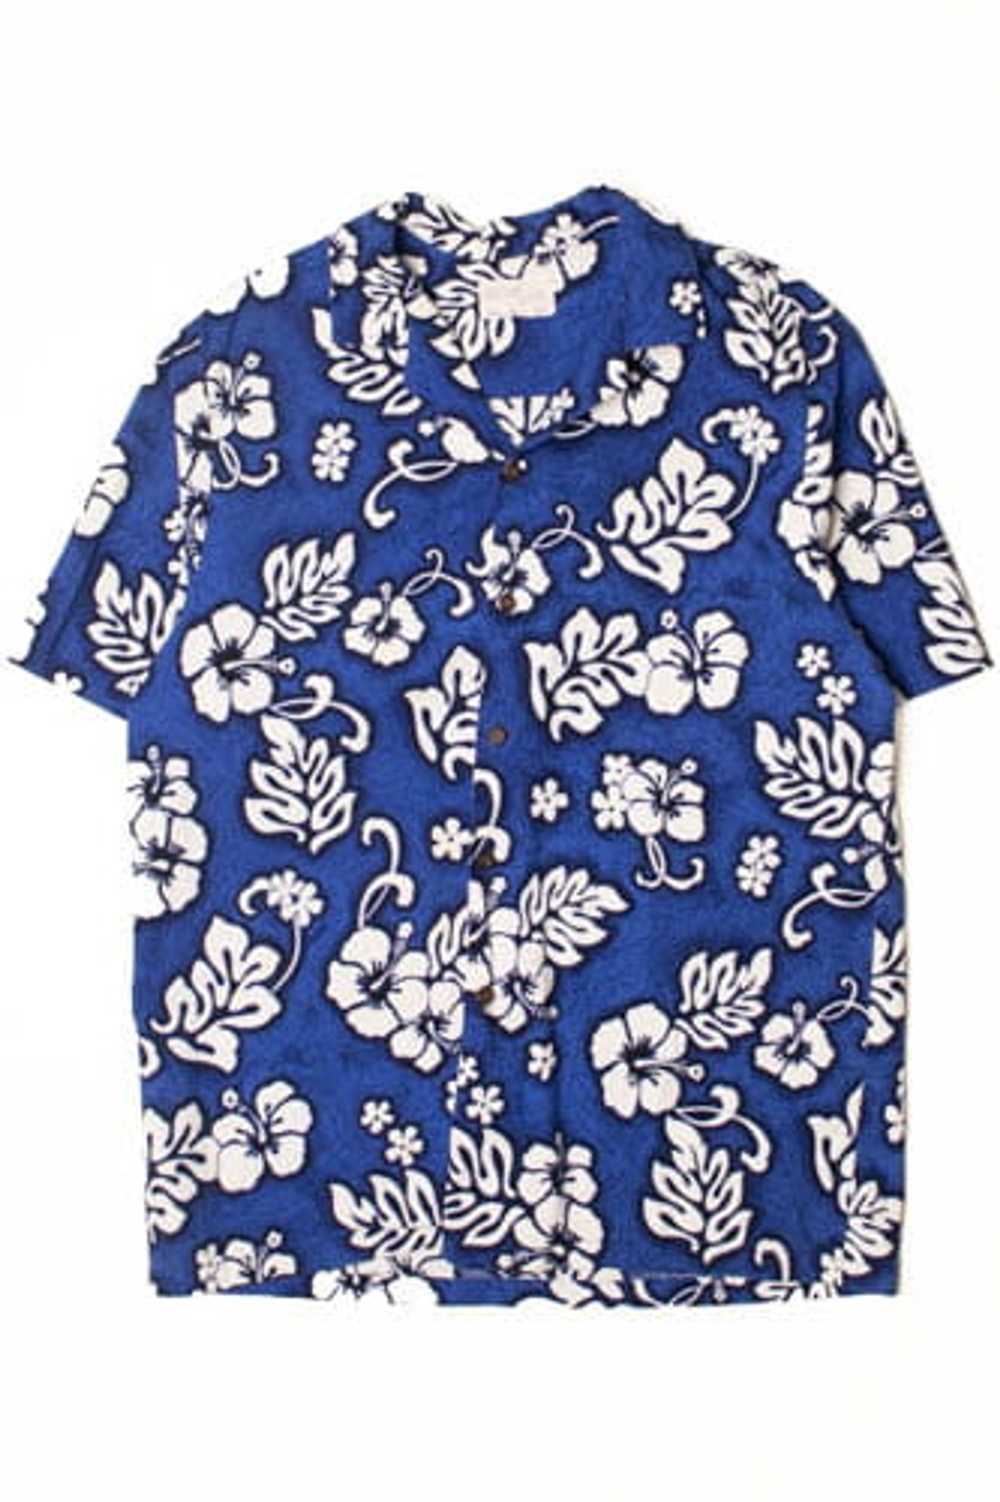 Vintage Hibiscus Hawaiian Shirt (1990s) 2335 - image 1